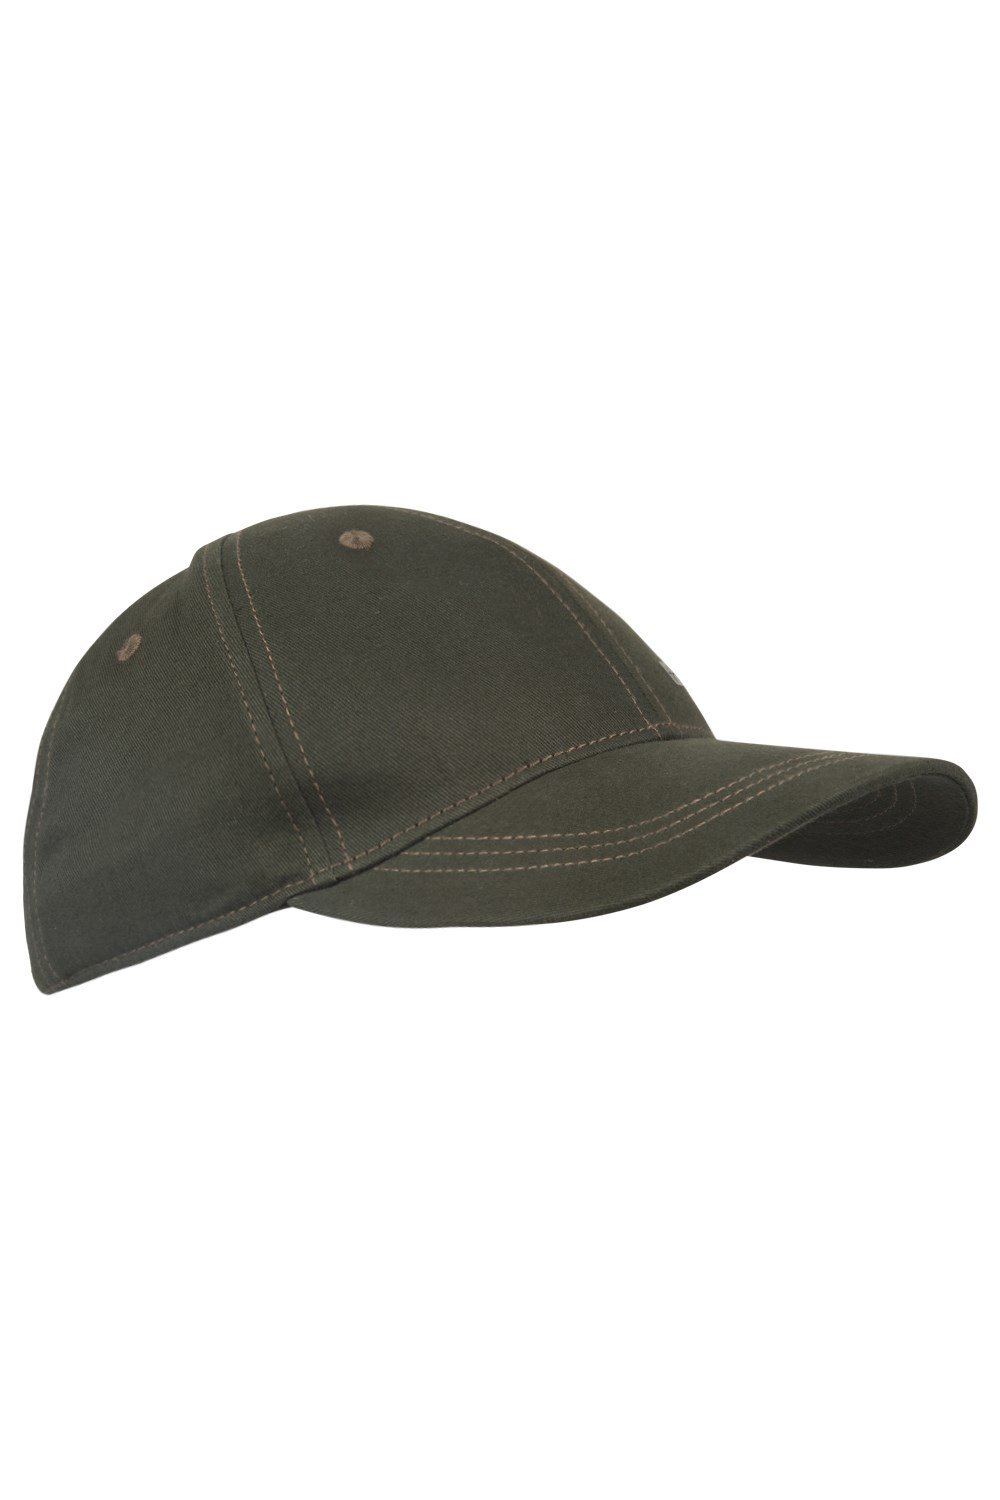 Twill Design Mountain Warehouse Mens Baseball Cap Lightweight Grey 100% Cotton Cap Hat